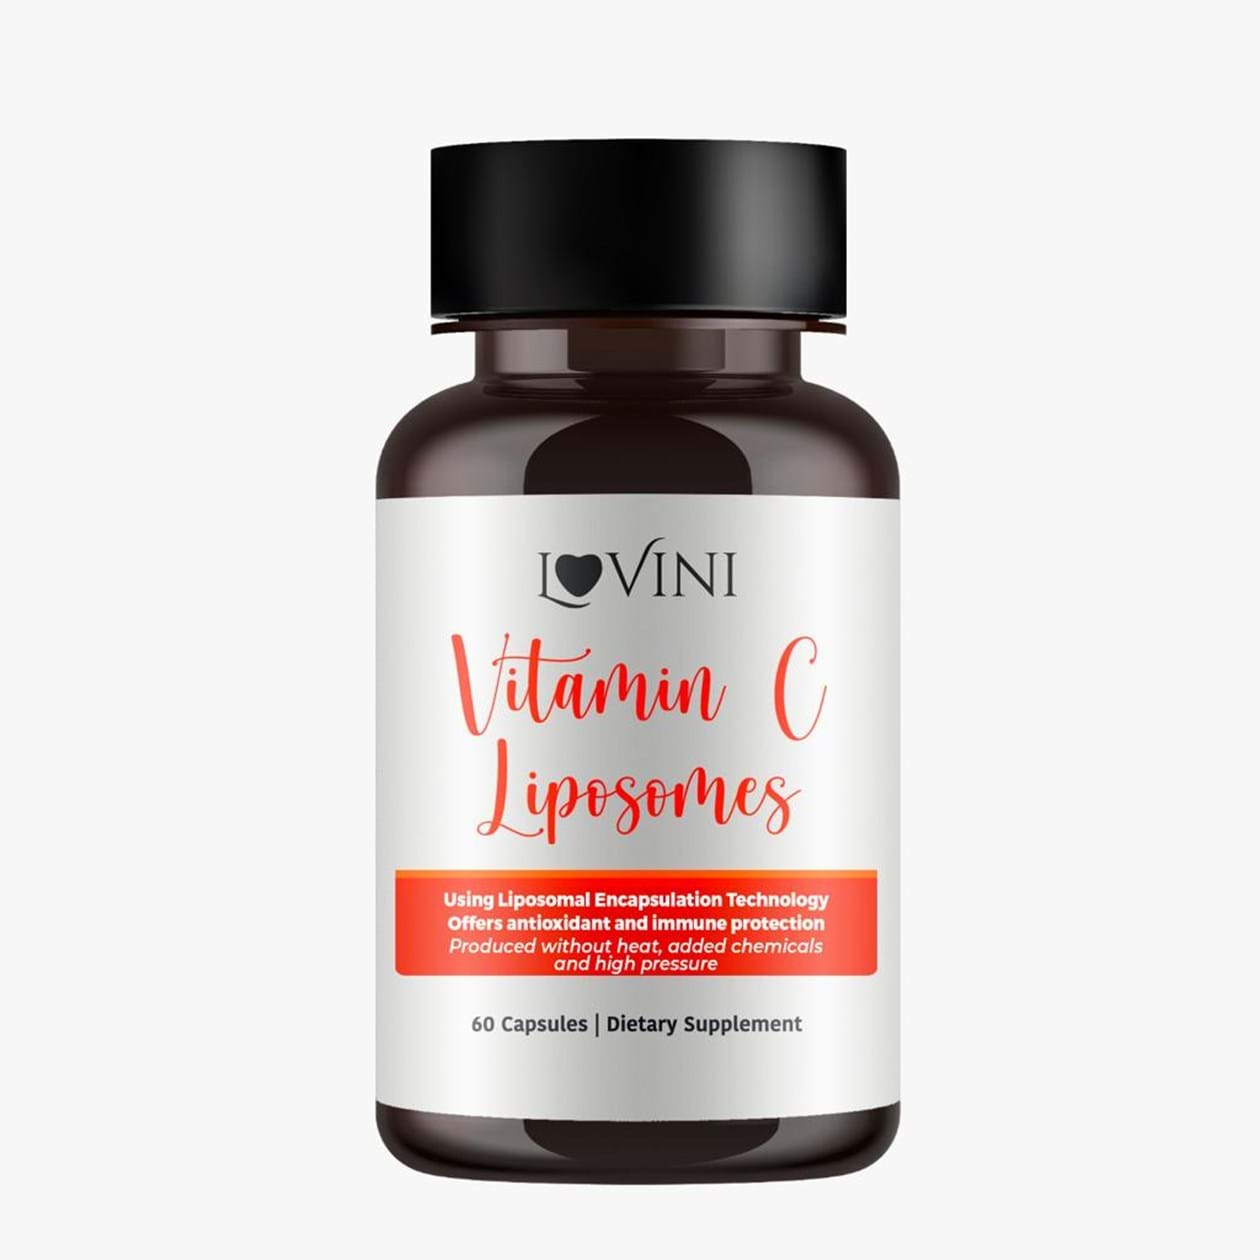 LOVINI Vitamin C Liposomes (60 Capsules) (Delivery Product)